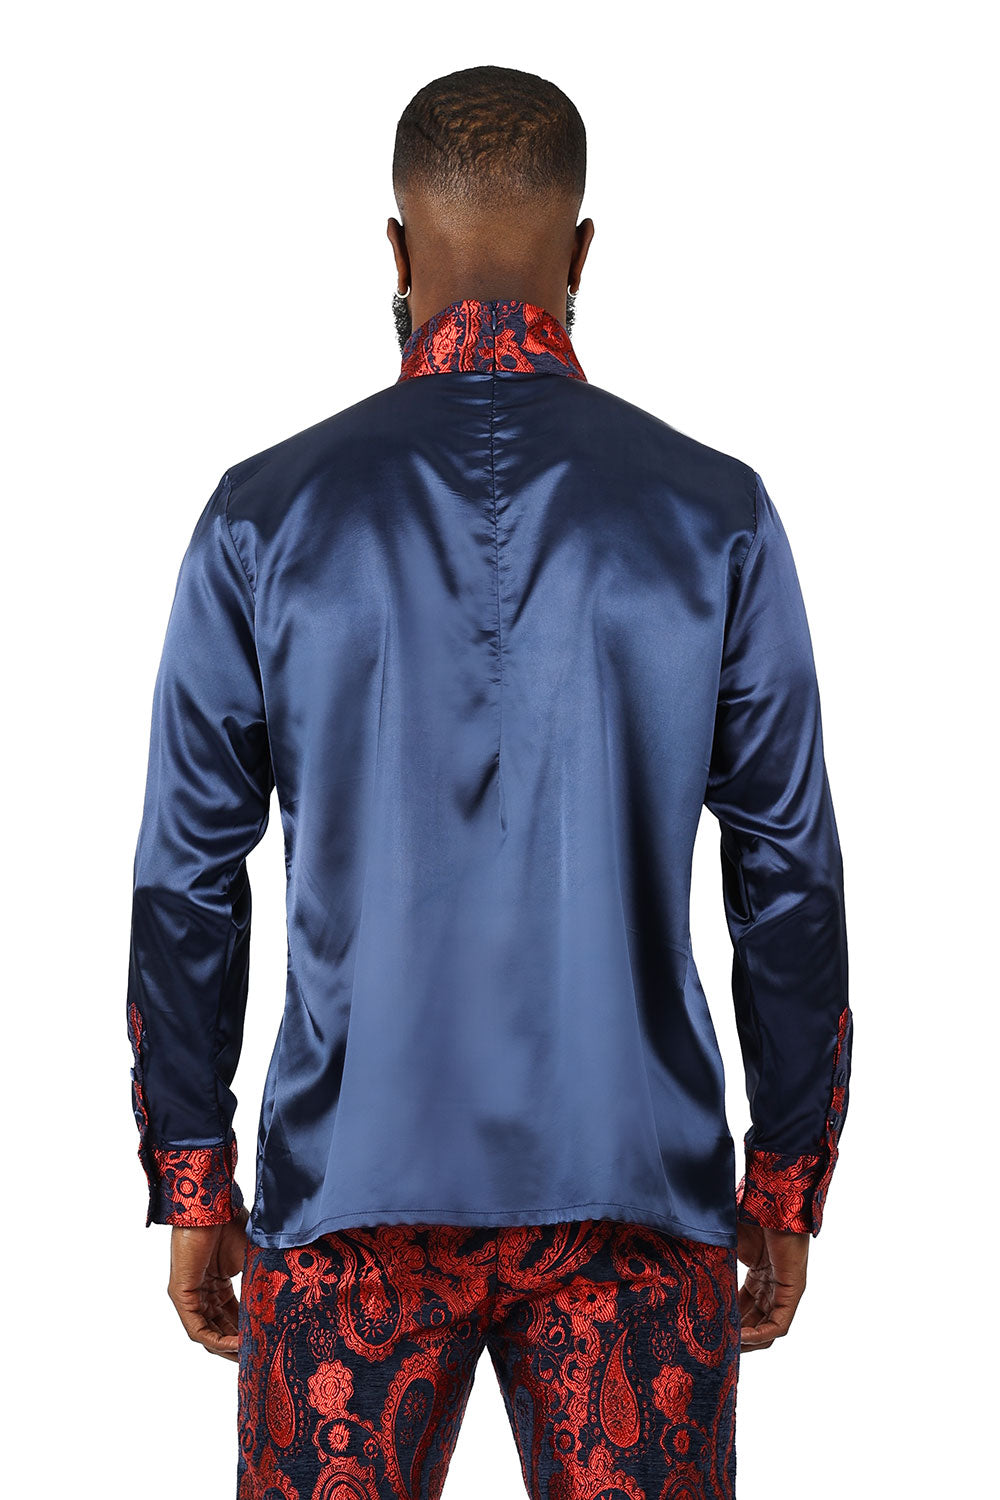 BARABAS Men's Paisley Long Sleeve Turtle Neck shirt 3MT05 Navy